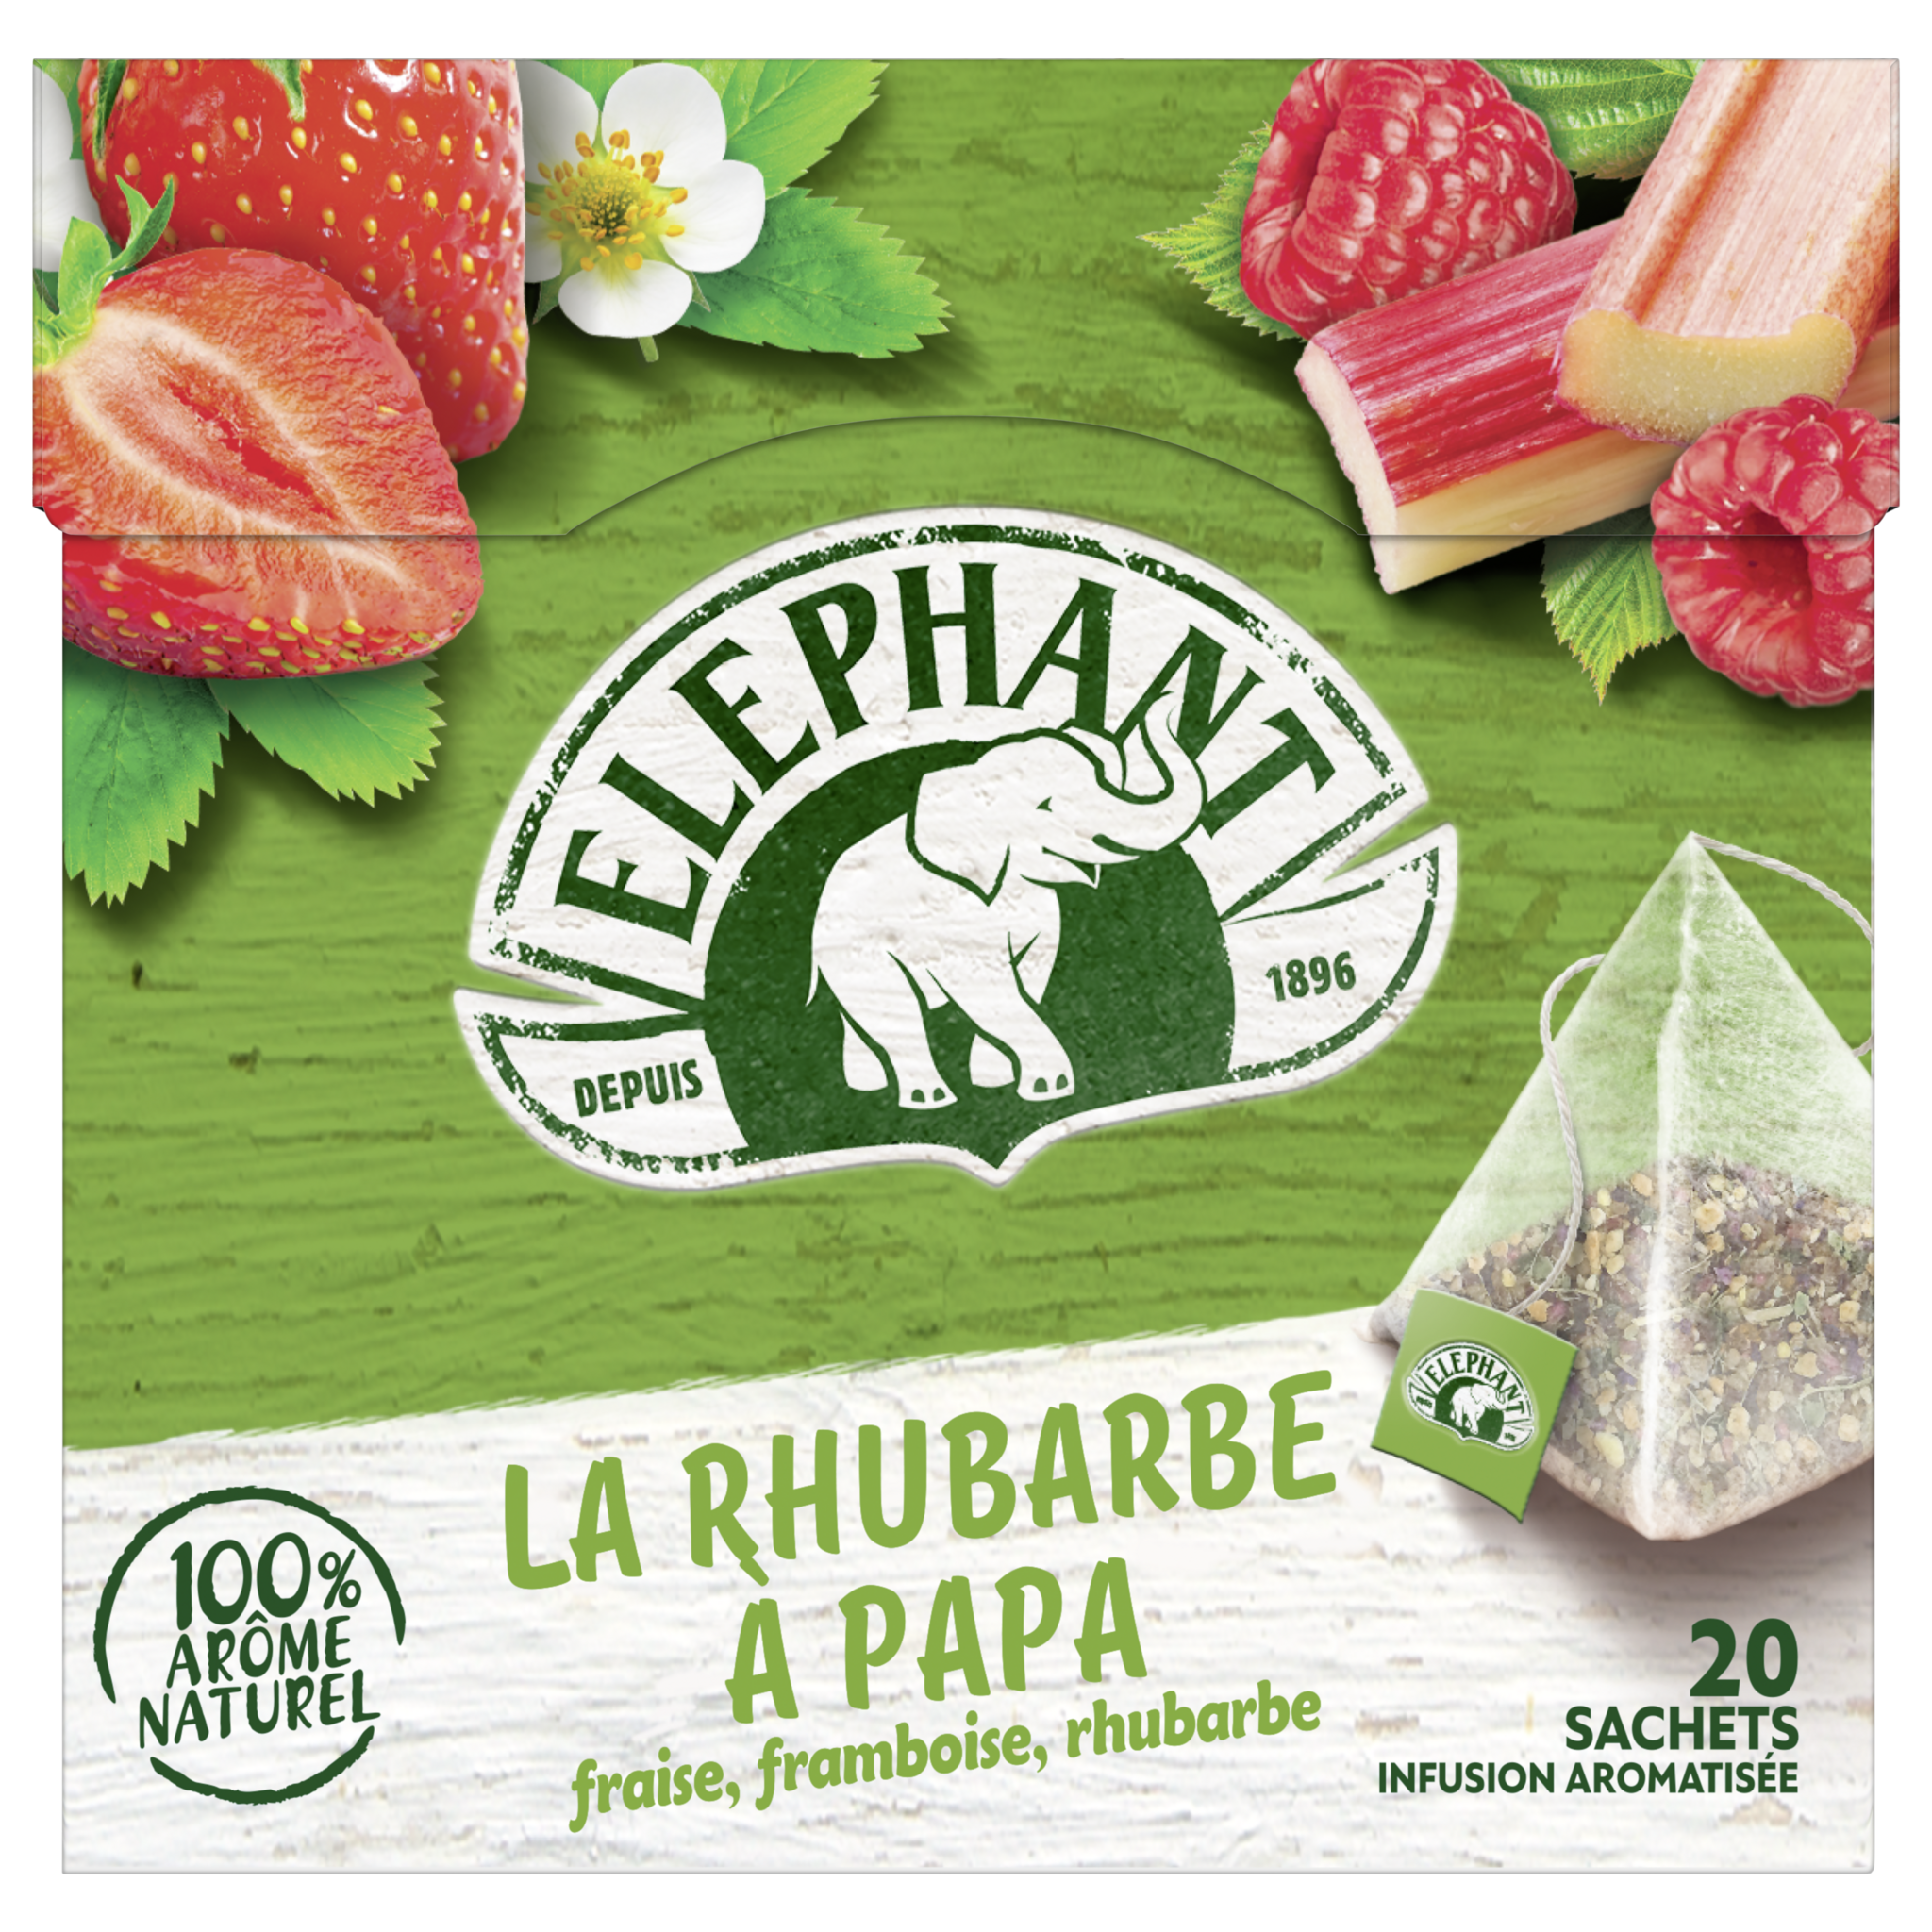 Infusion La rhubarbe à papa fraise framboise et rhubarbe, Elephant (20  sachets)